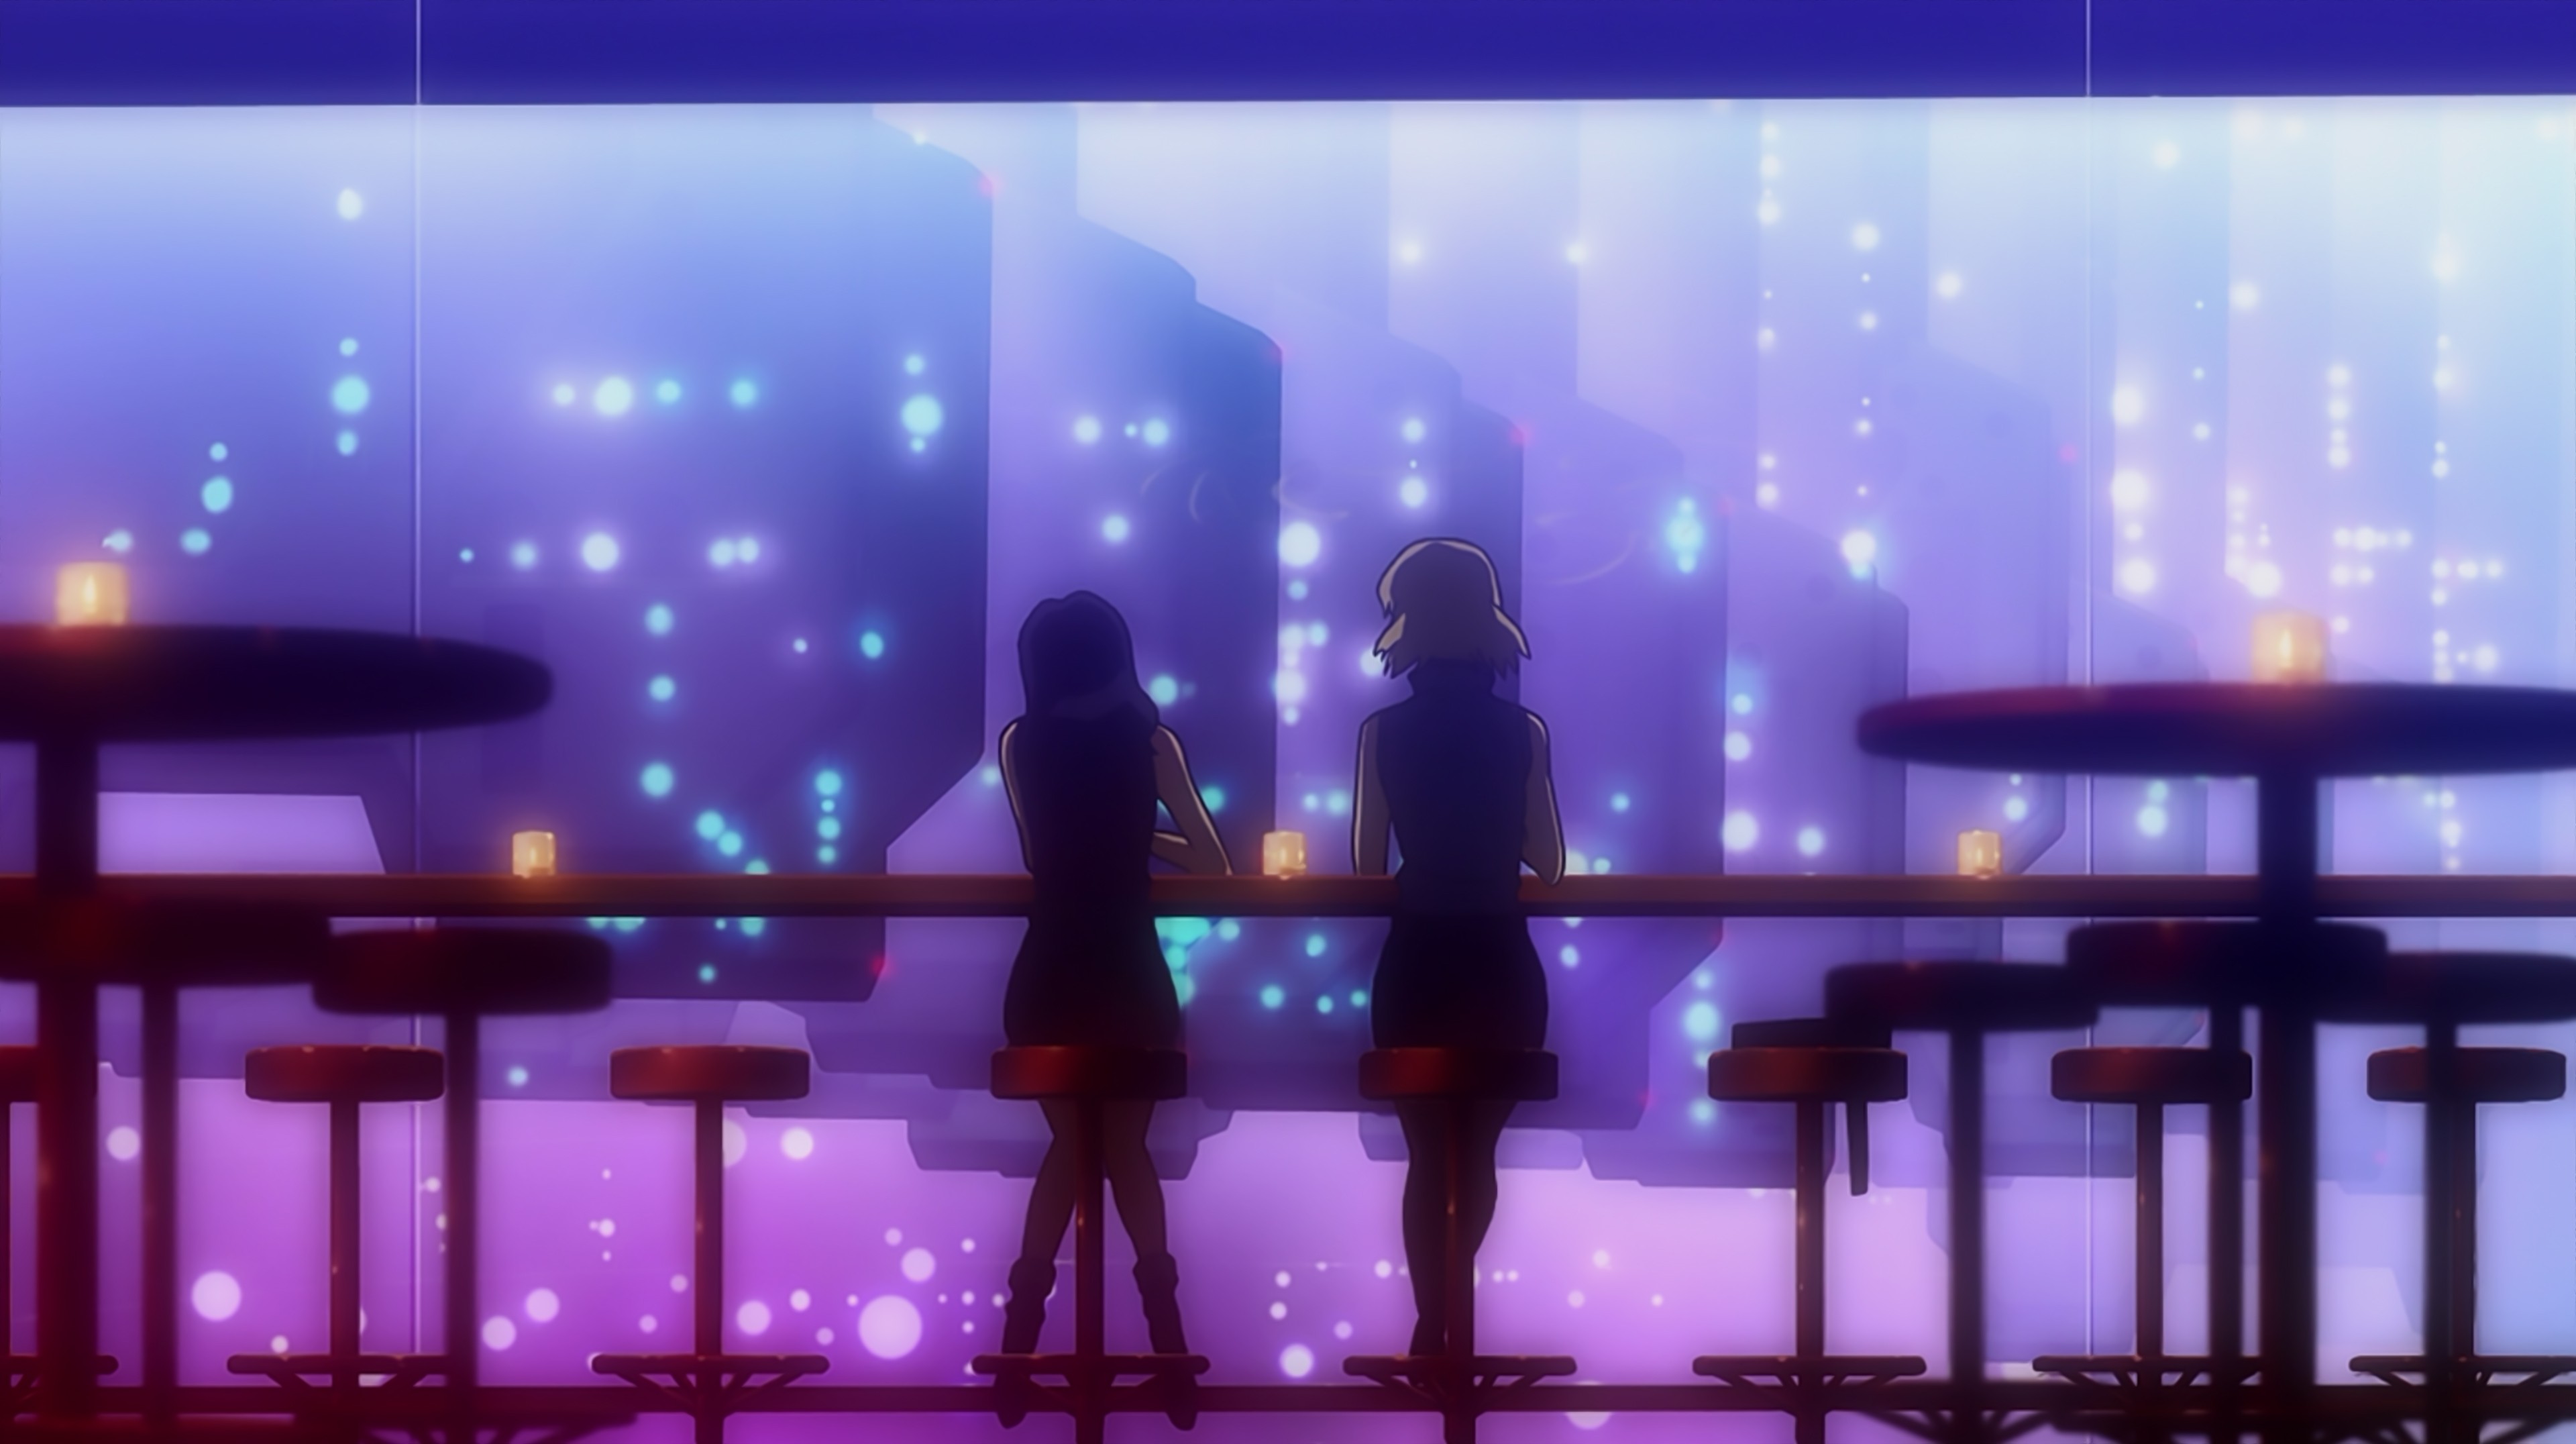 Anime 3840x2152 Katsuragi Misato anime cafe women two women bar women indoors indoors anime girls